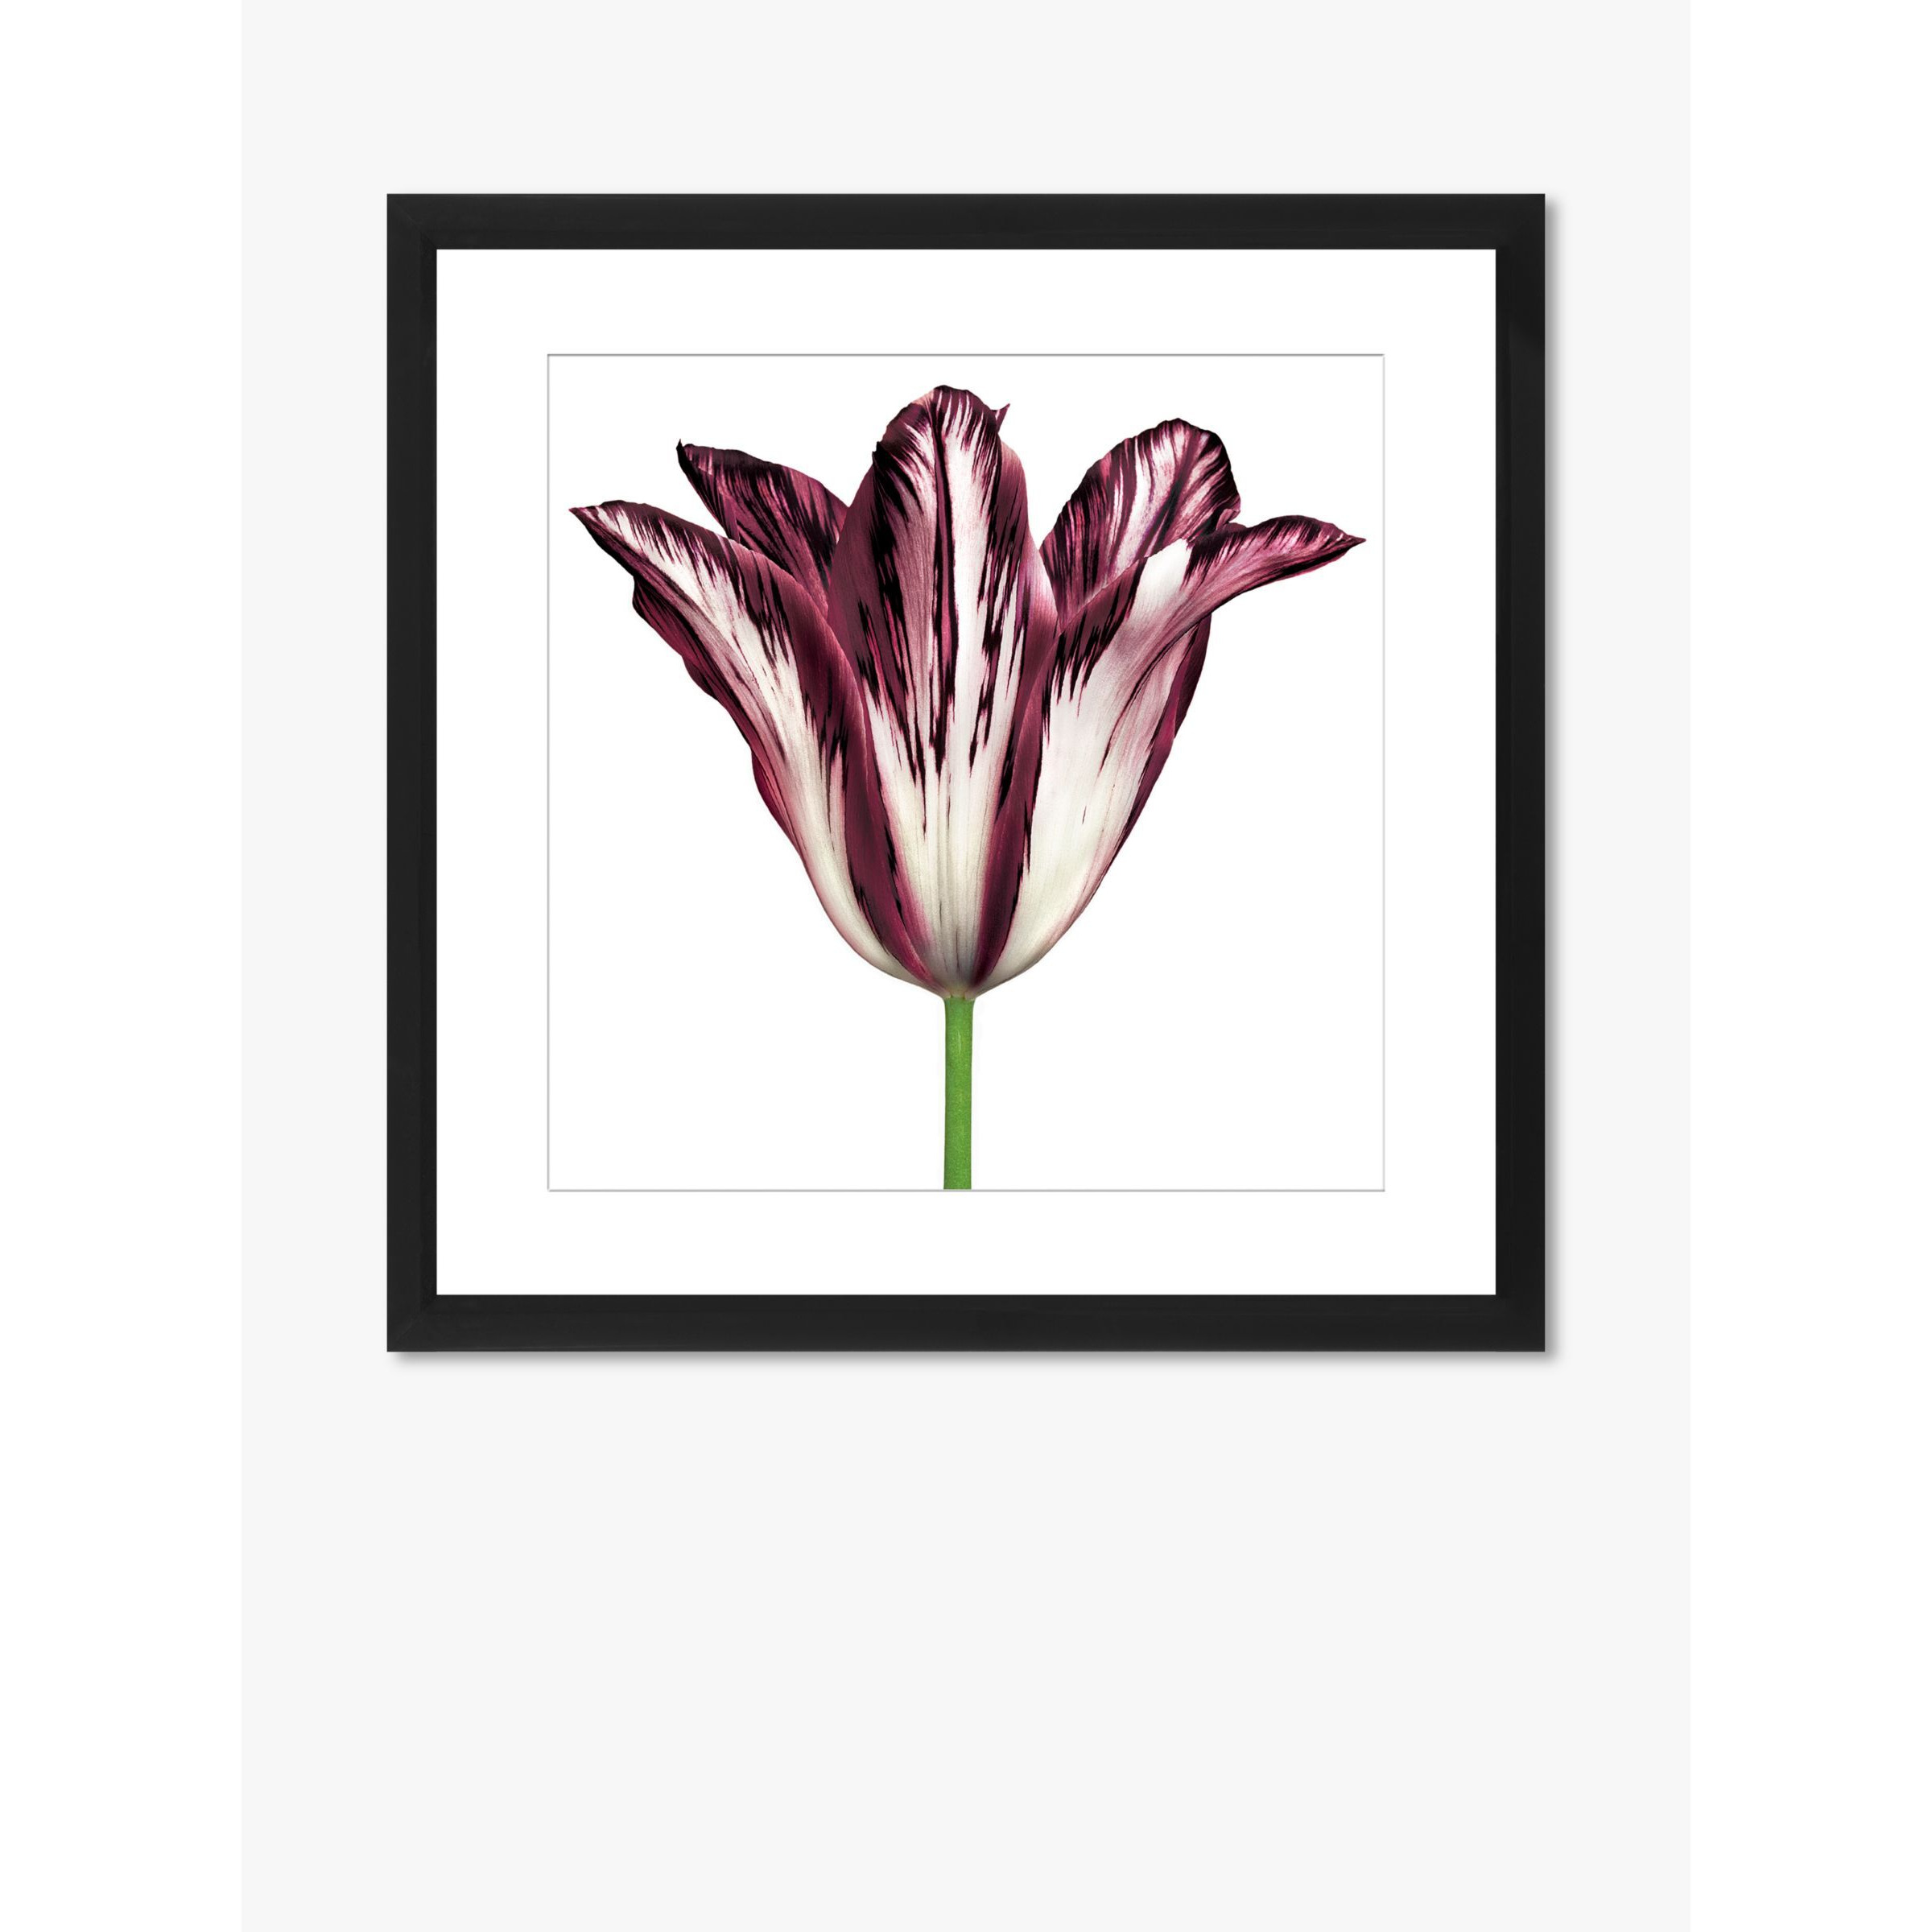 Burgundy Tulip 2 - Framed Print & Mount, 56 x 56cm, Burgundy - image 1